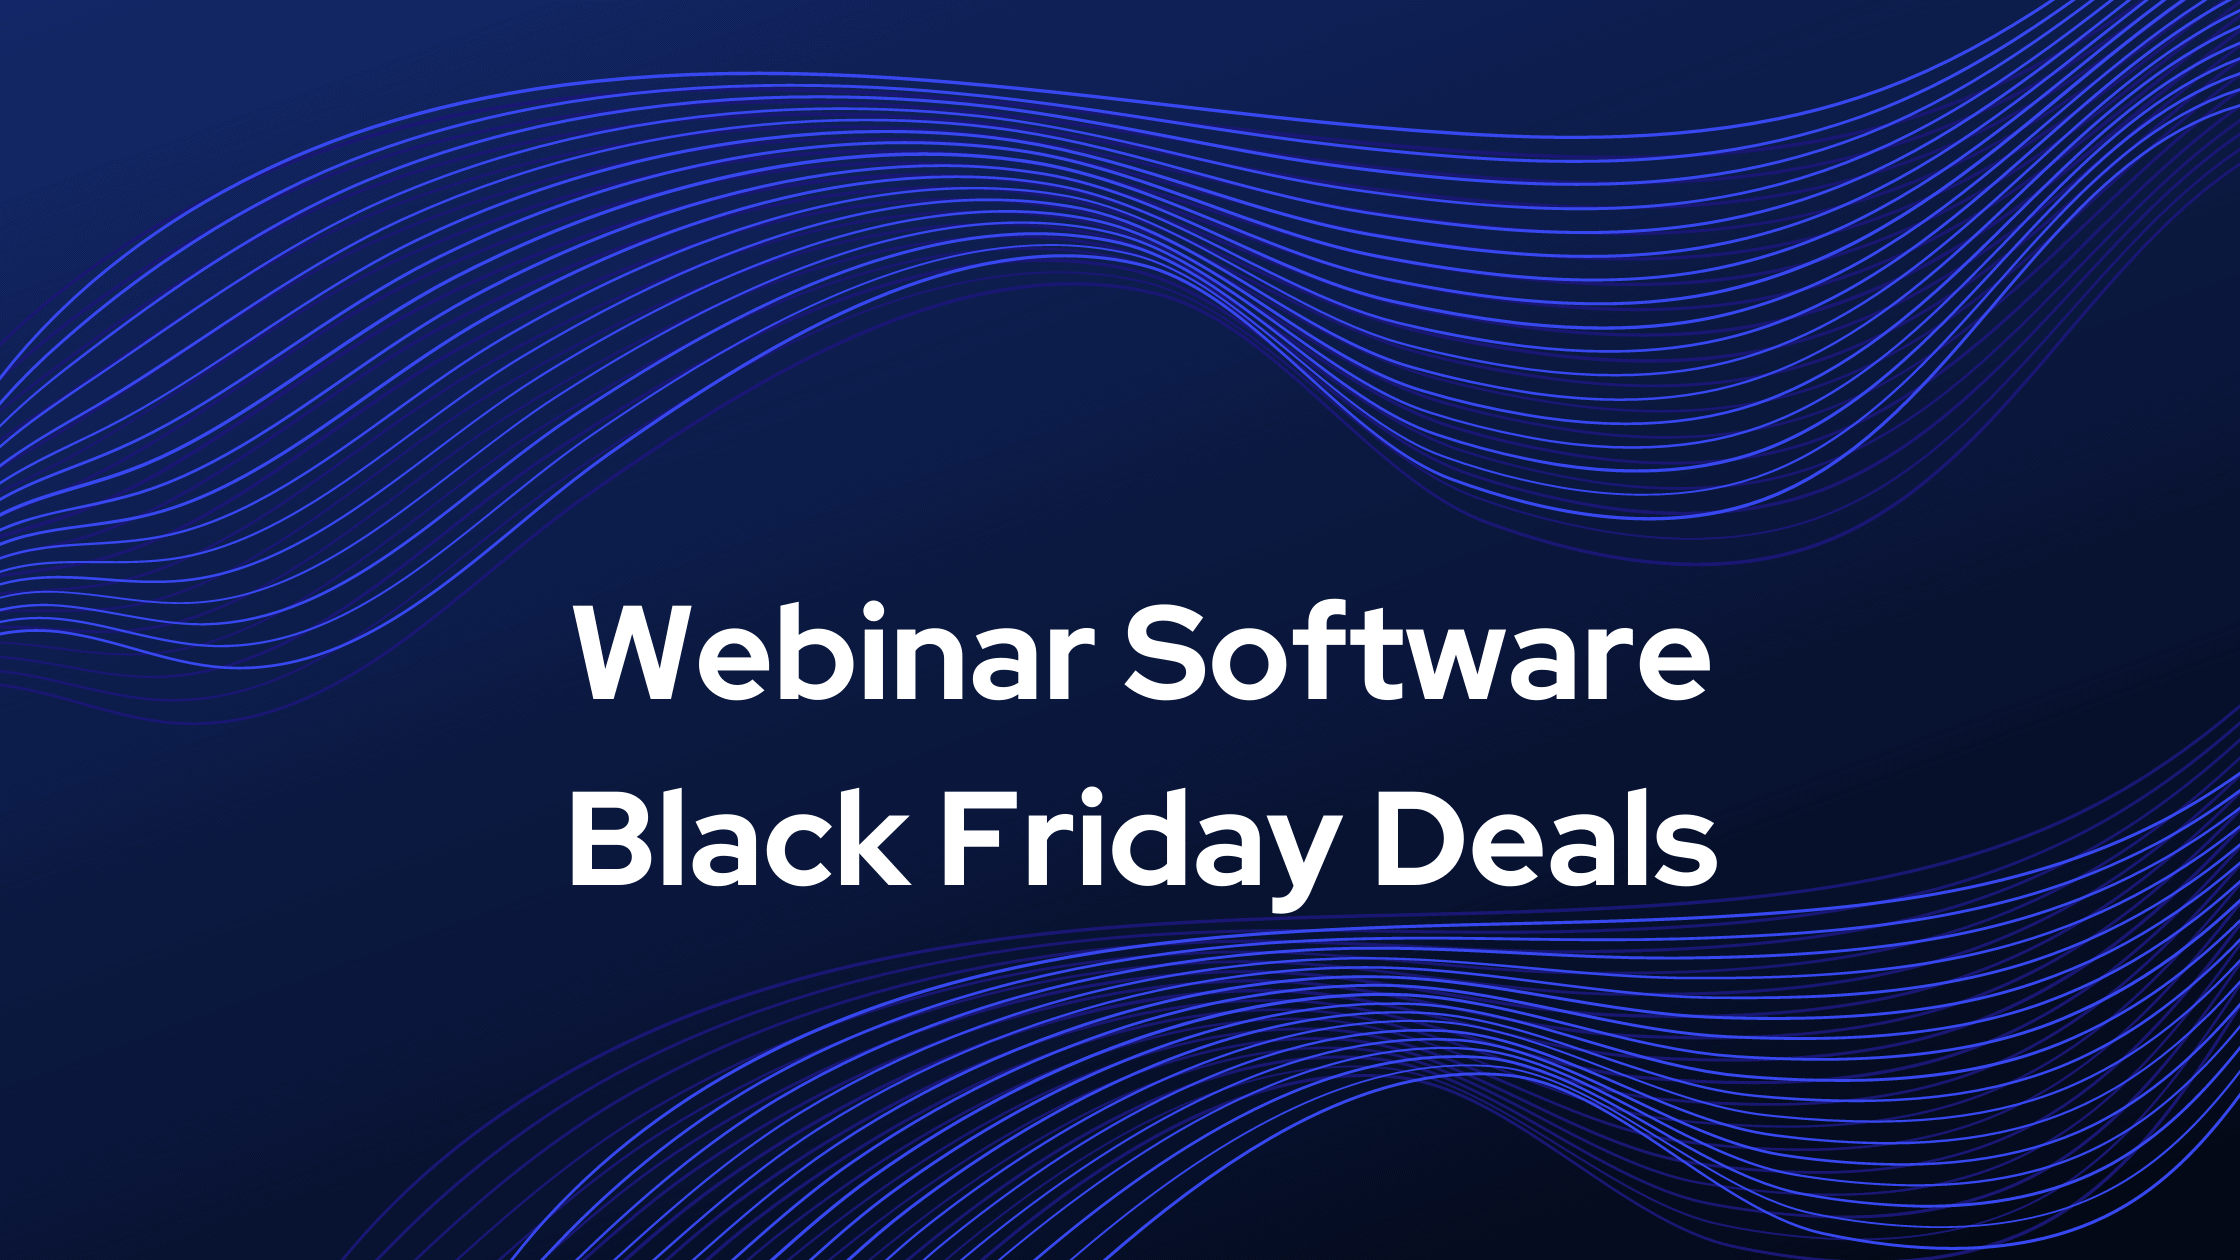 Webinar Software Black Friday Deals